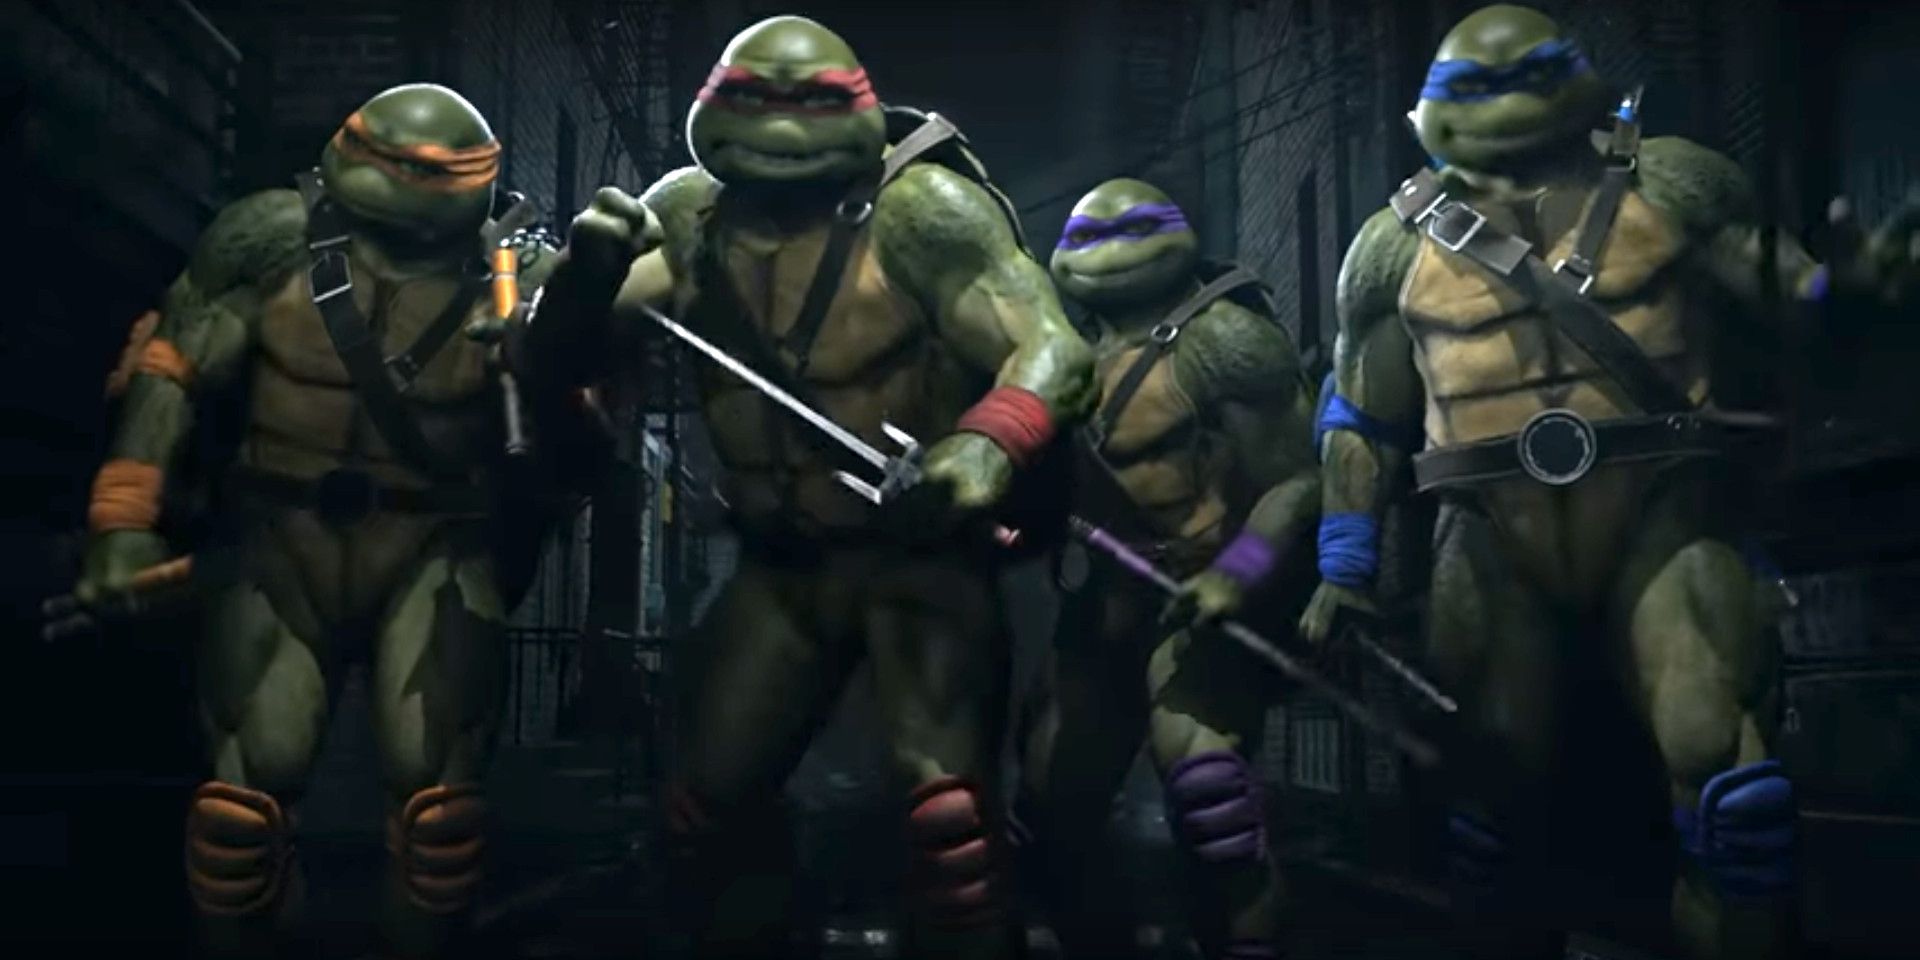 The reveal of the Teenage Mutant Ninja Turtles in Injustice 2